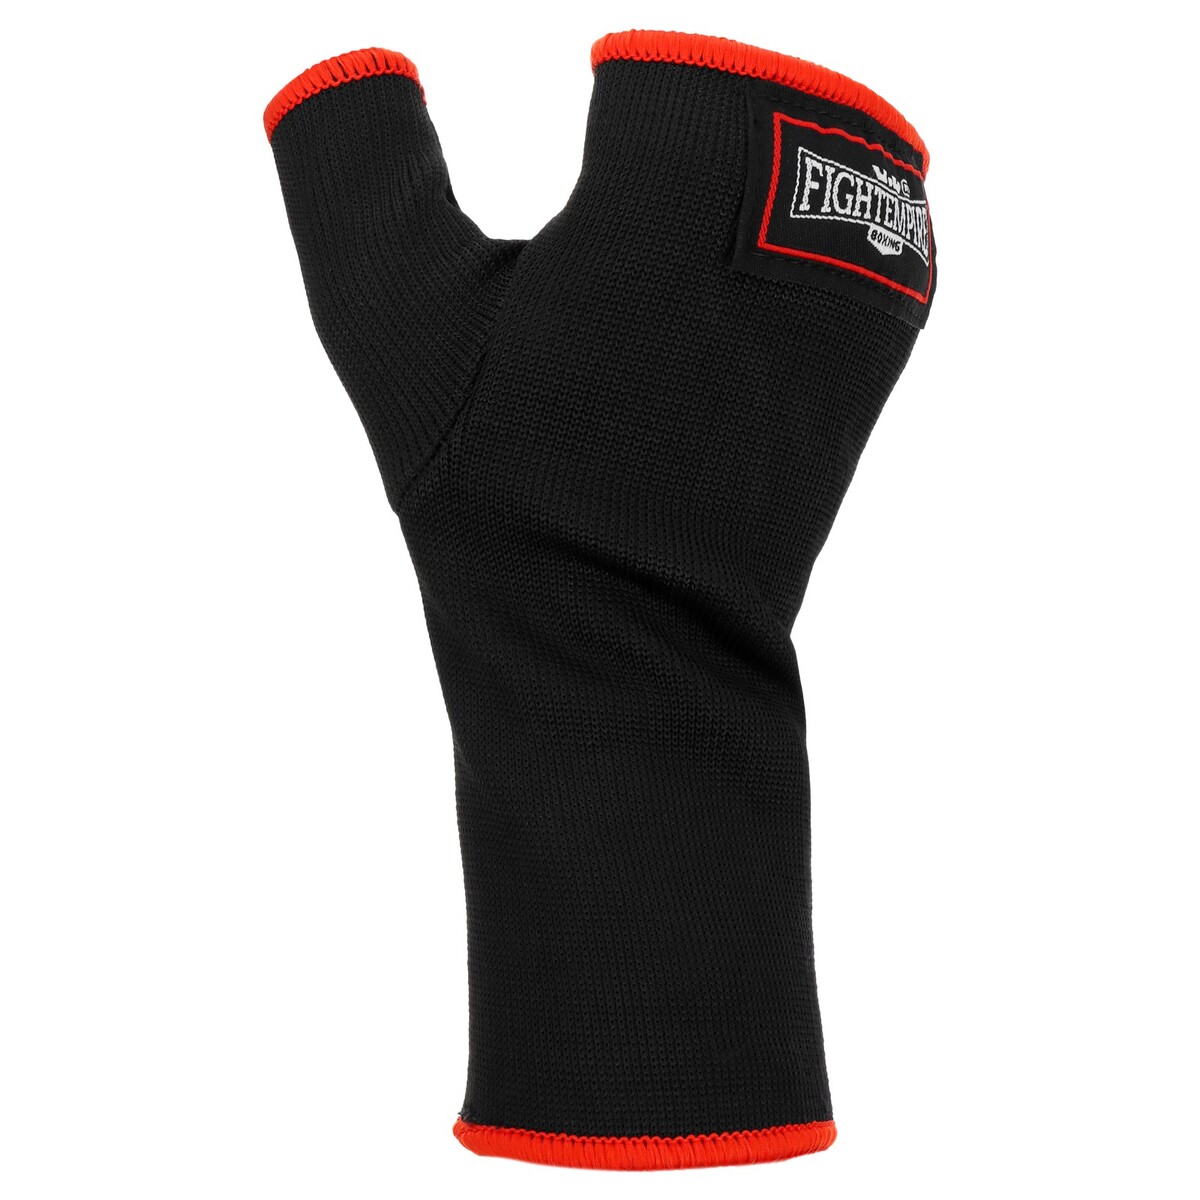 Внутренние перчатки fight empire, inner gloves oxford велоперчатки oxford coolmax gloves ростовка s m